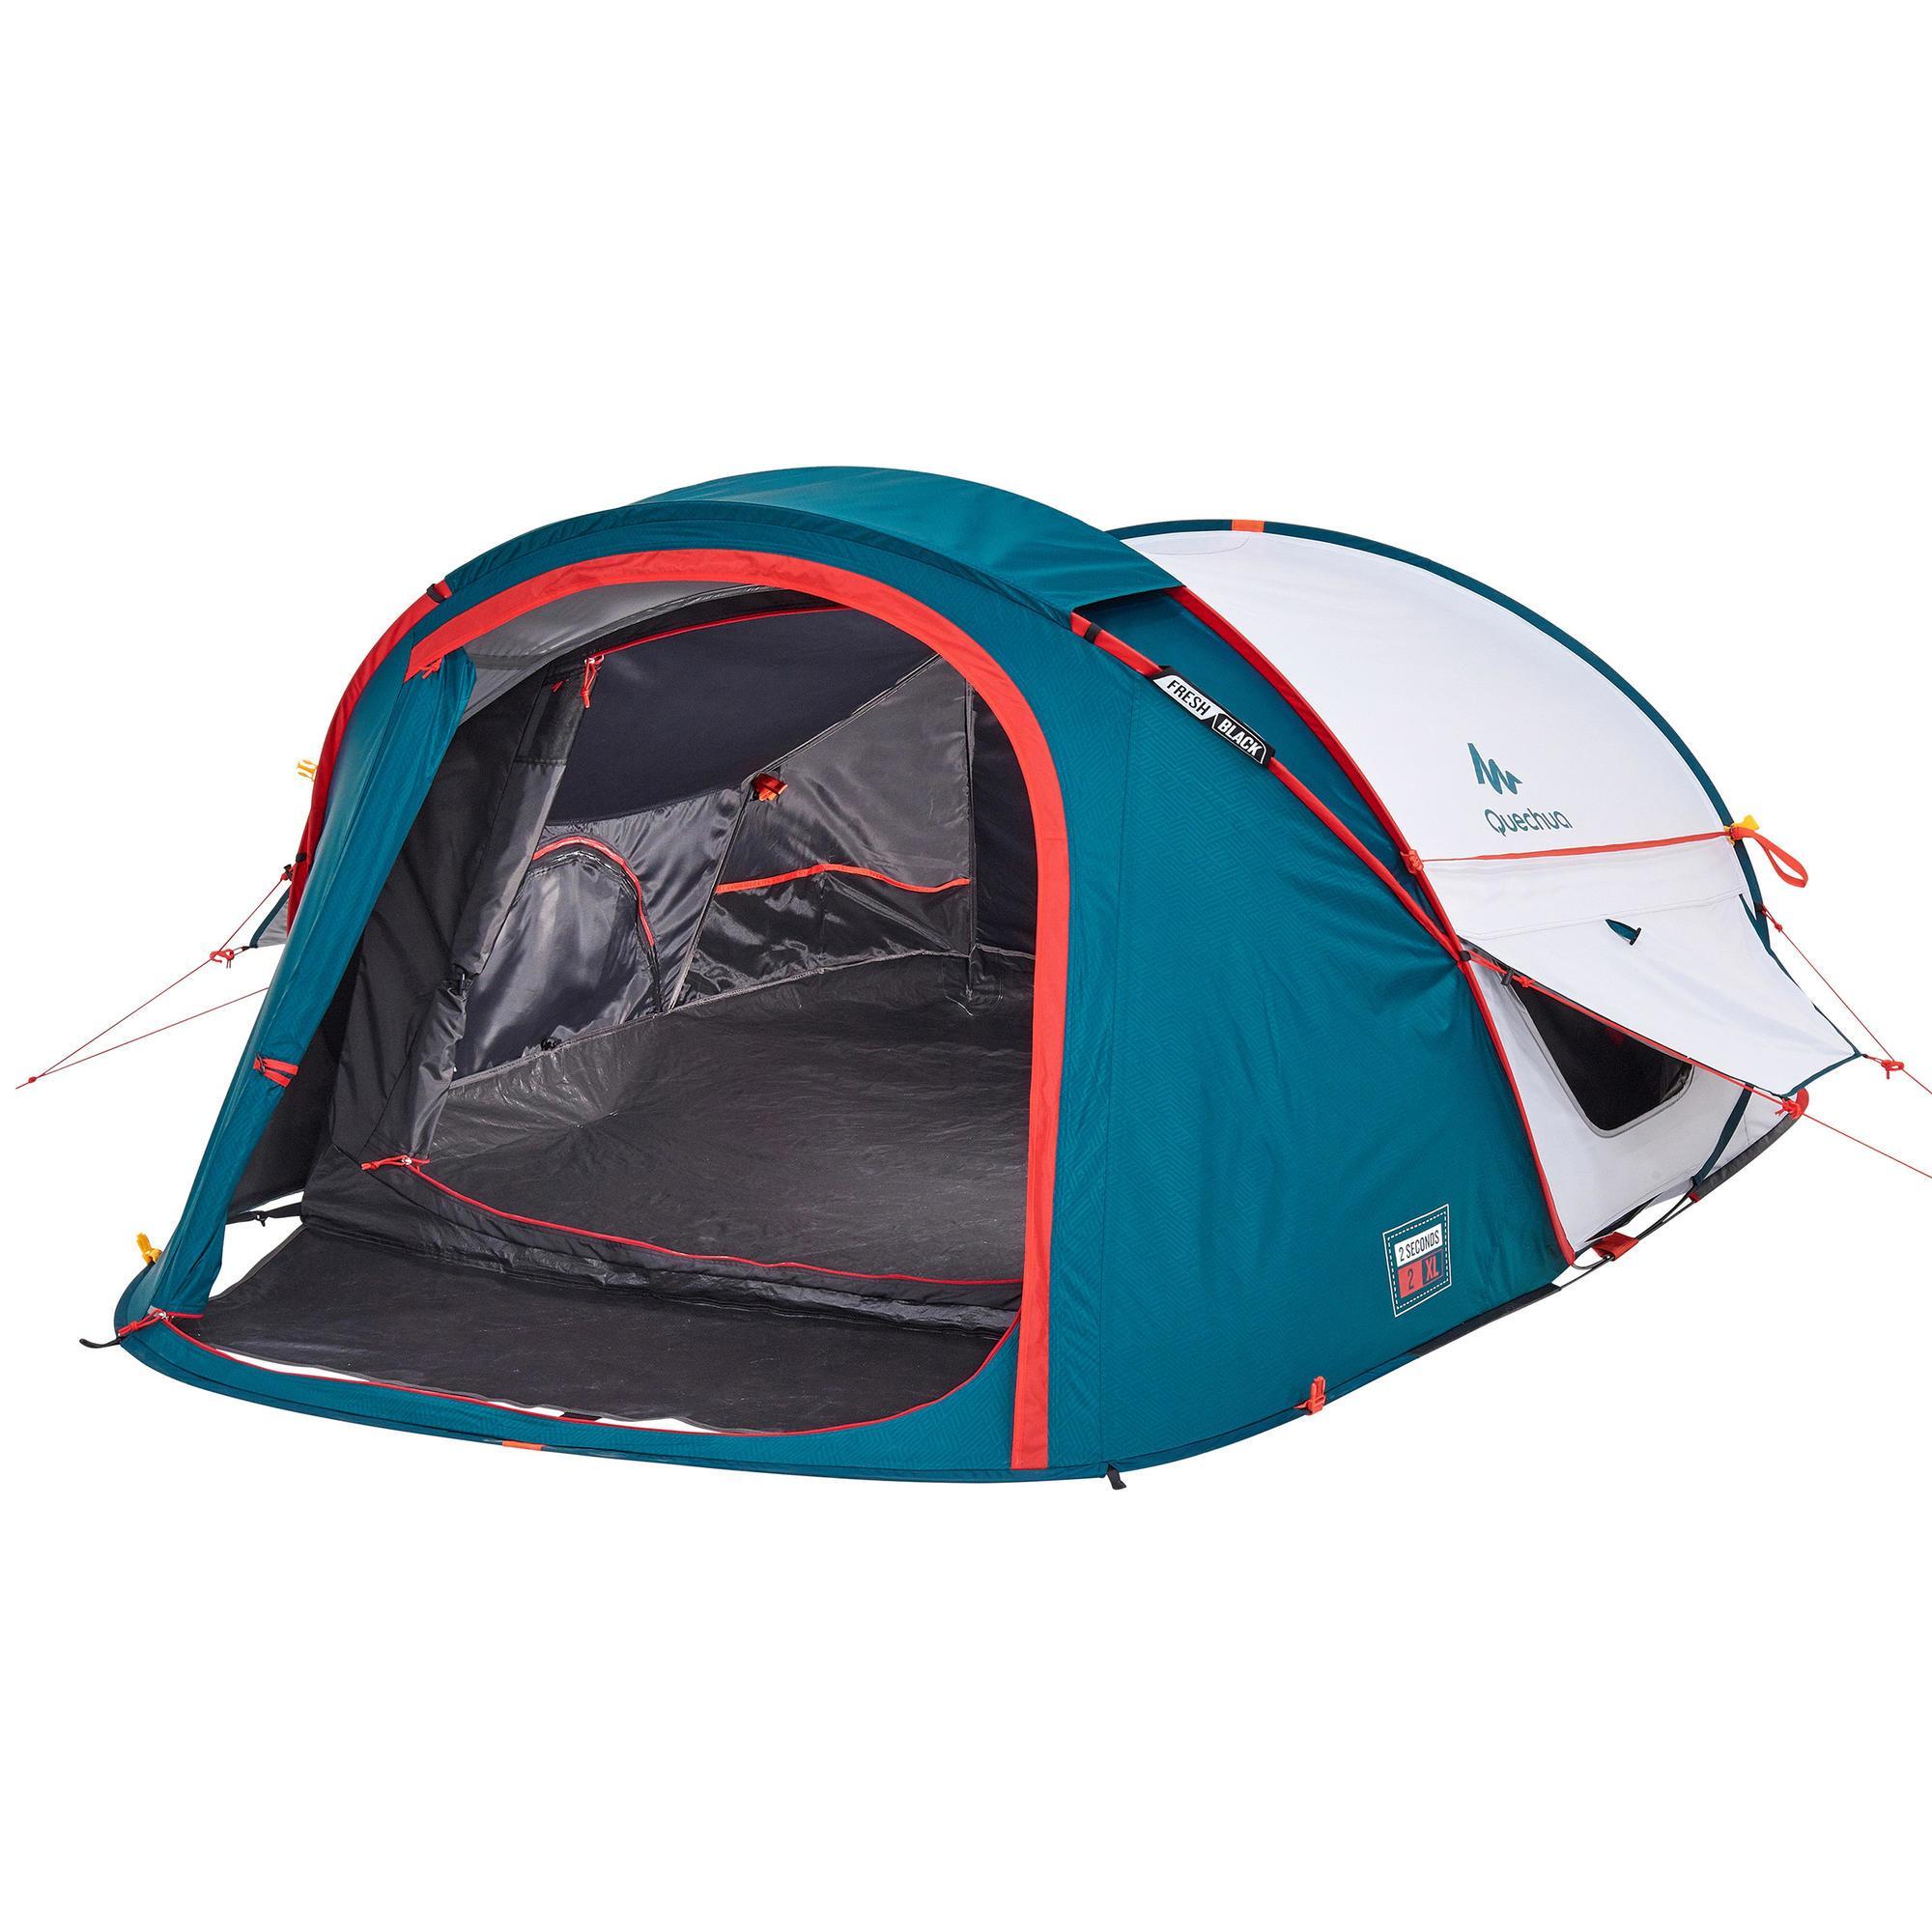 Cort camping 2 SECONDS XL FRESH&BLACK 2 persoane QUECHUA decathlon.ro